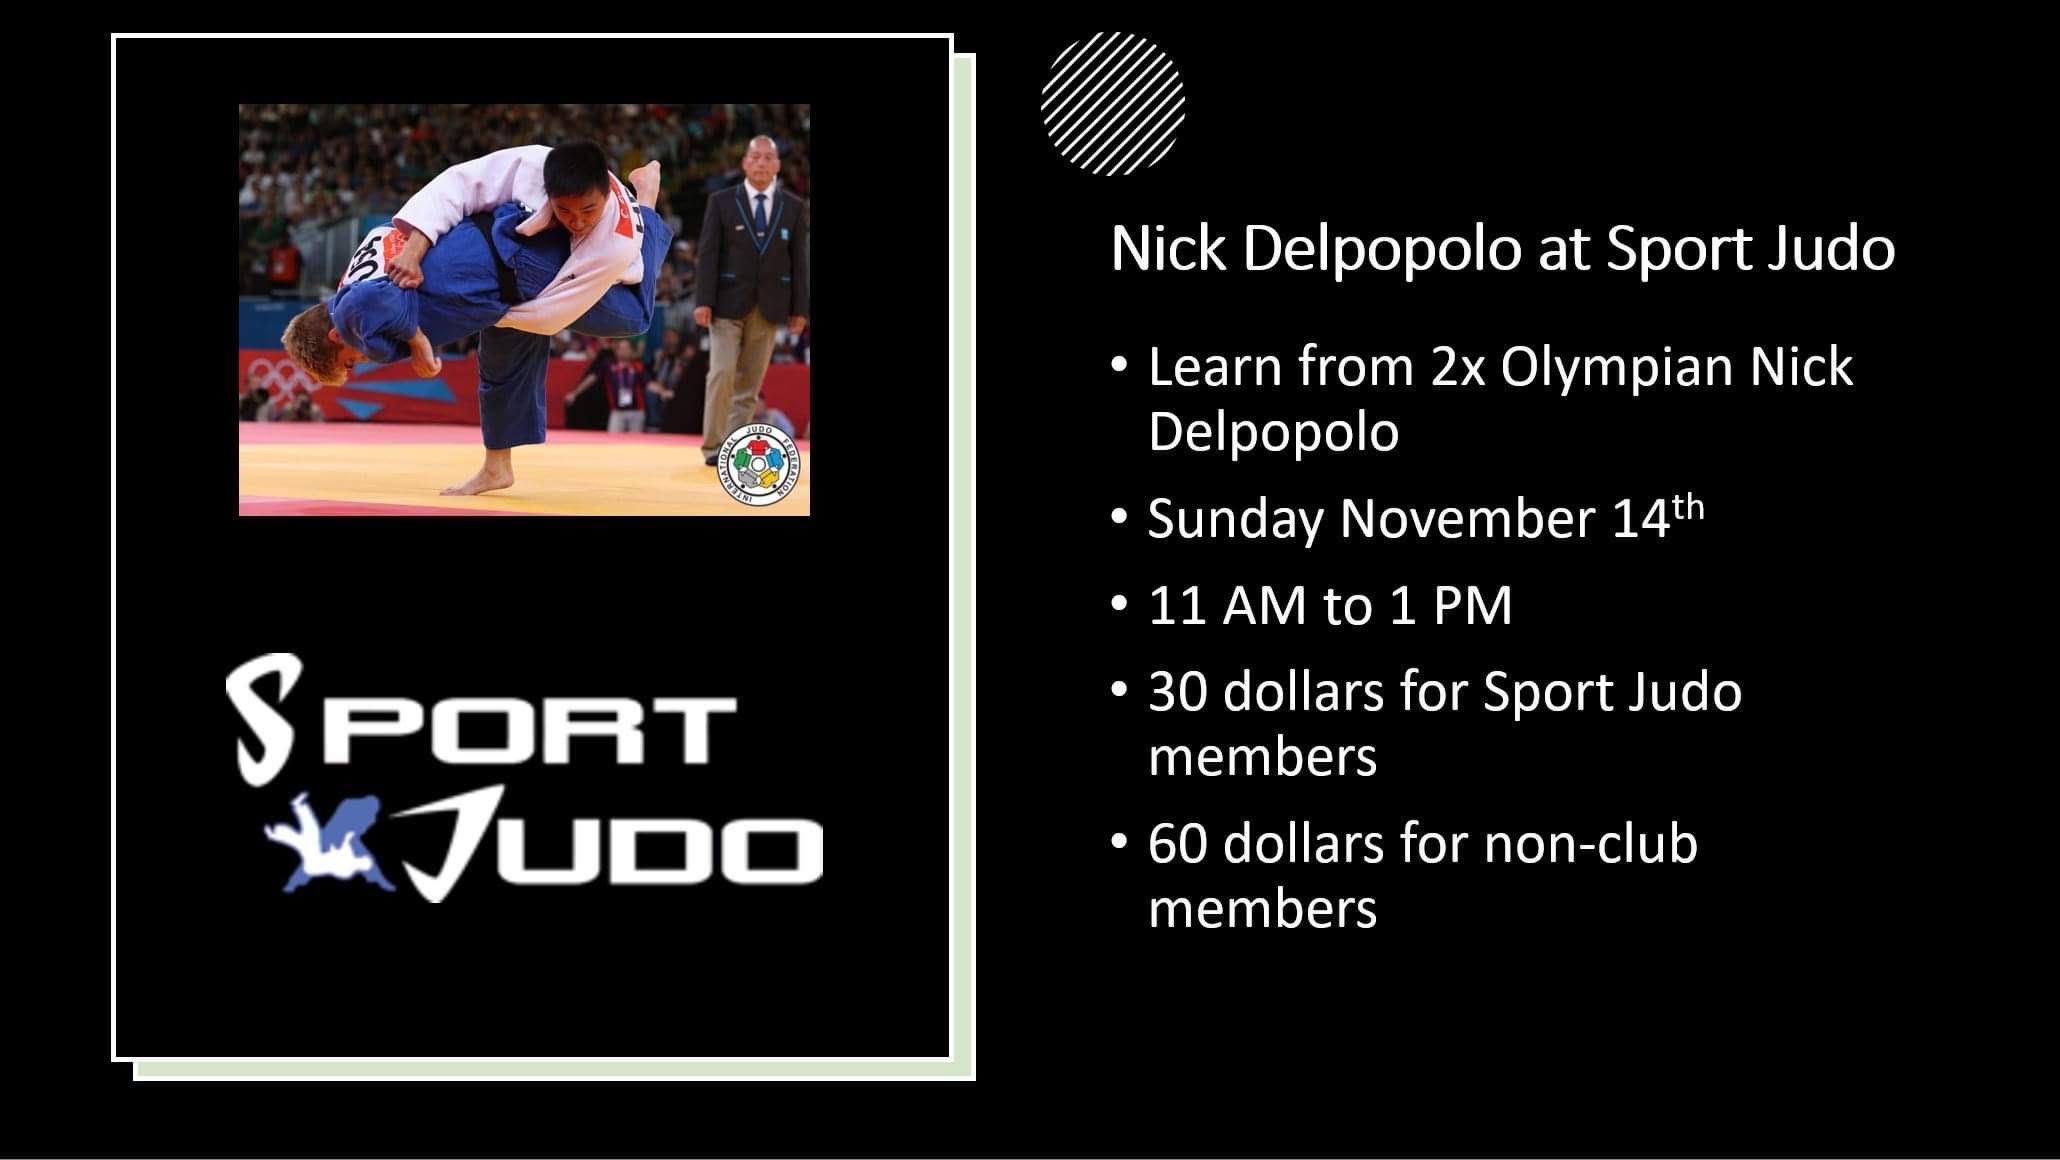 Nick Delpopolo at Sport Judo on Sunday November 14th